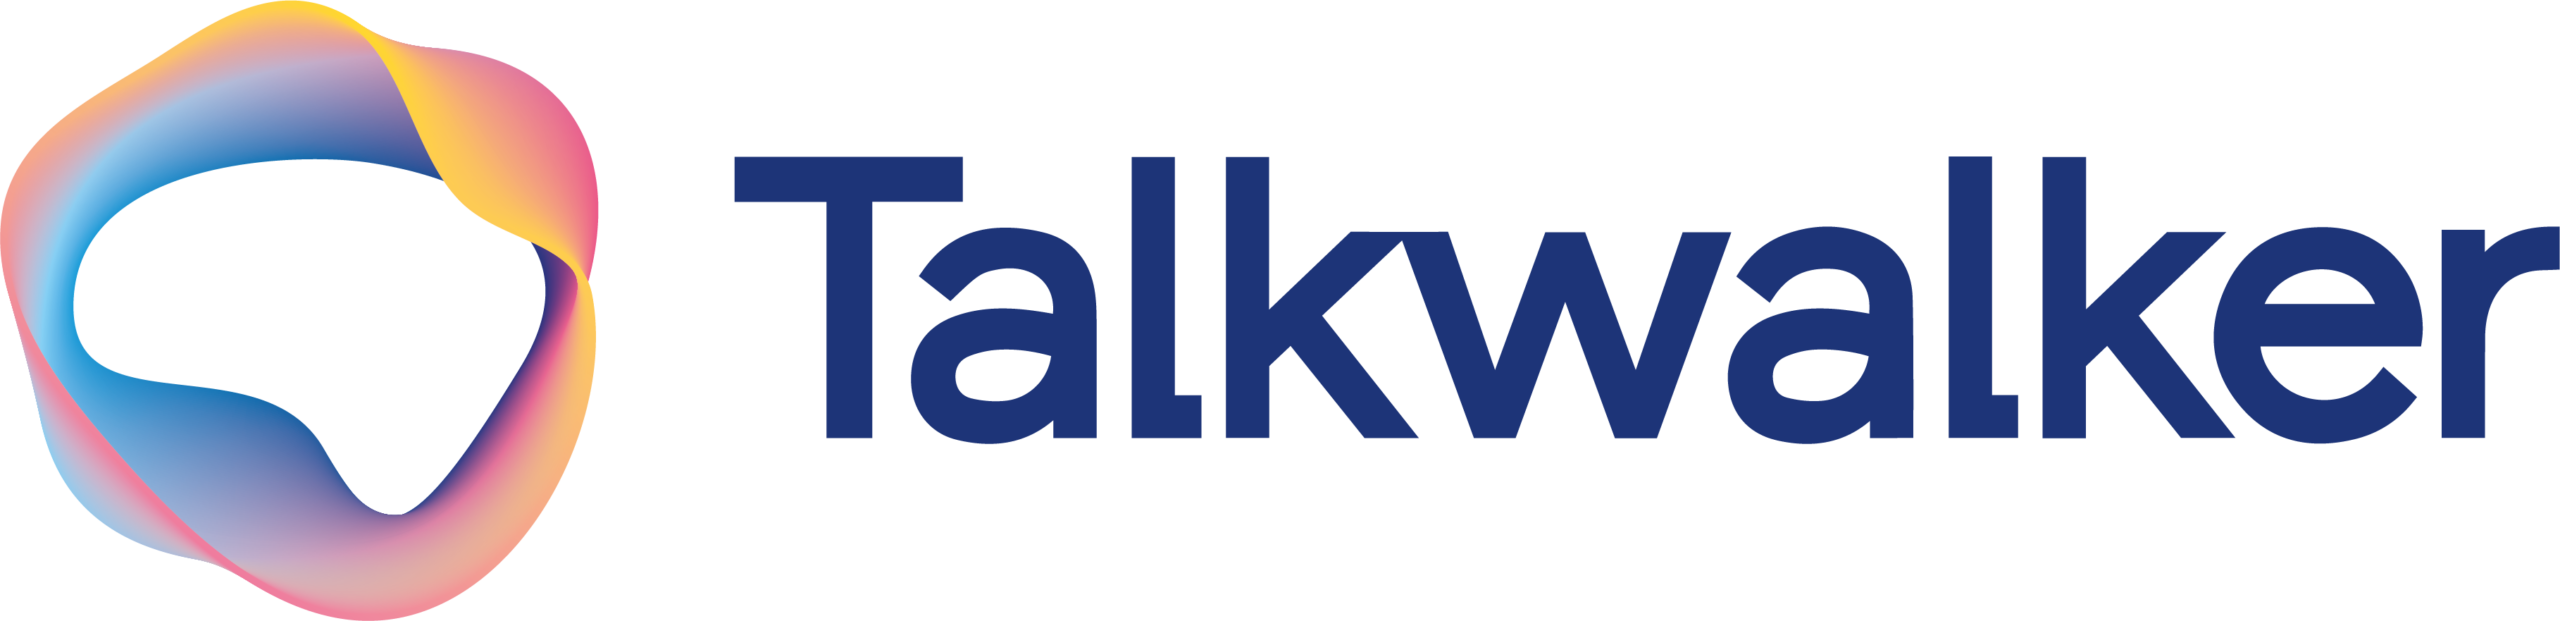 talkwalker logo full blue